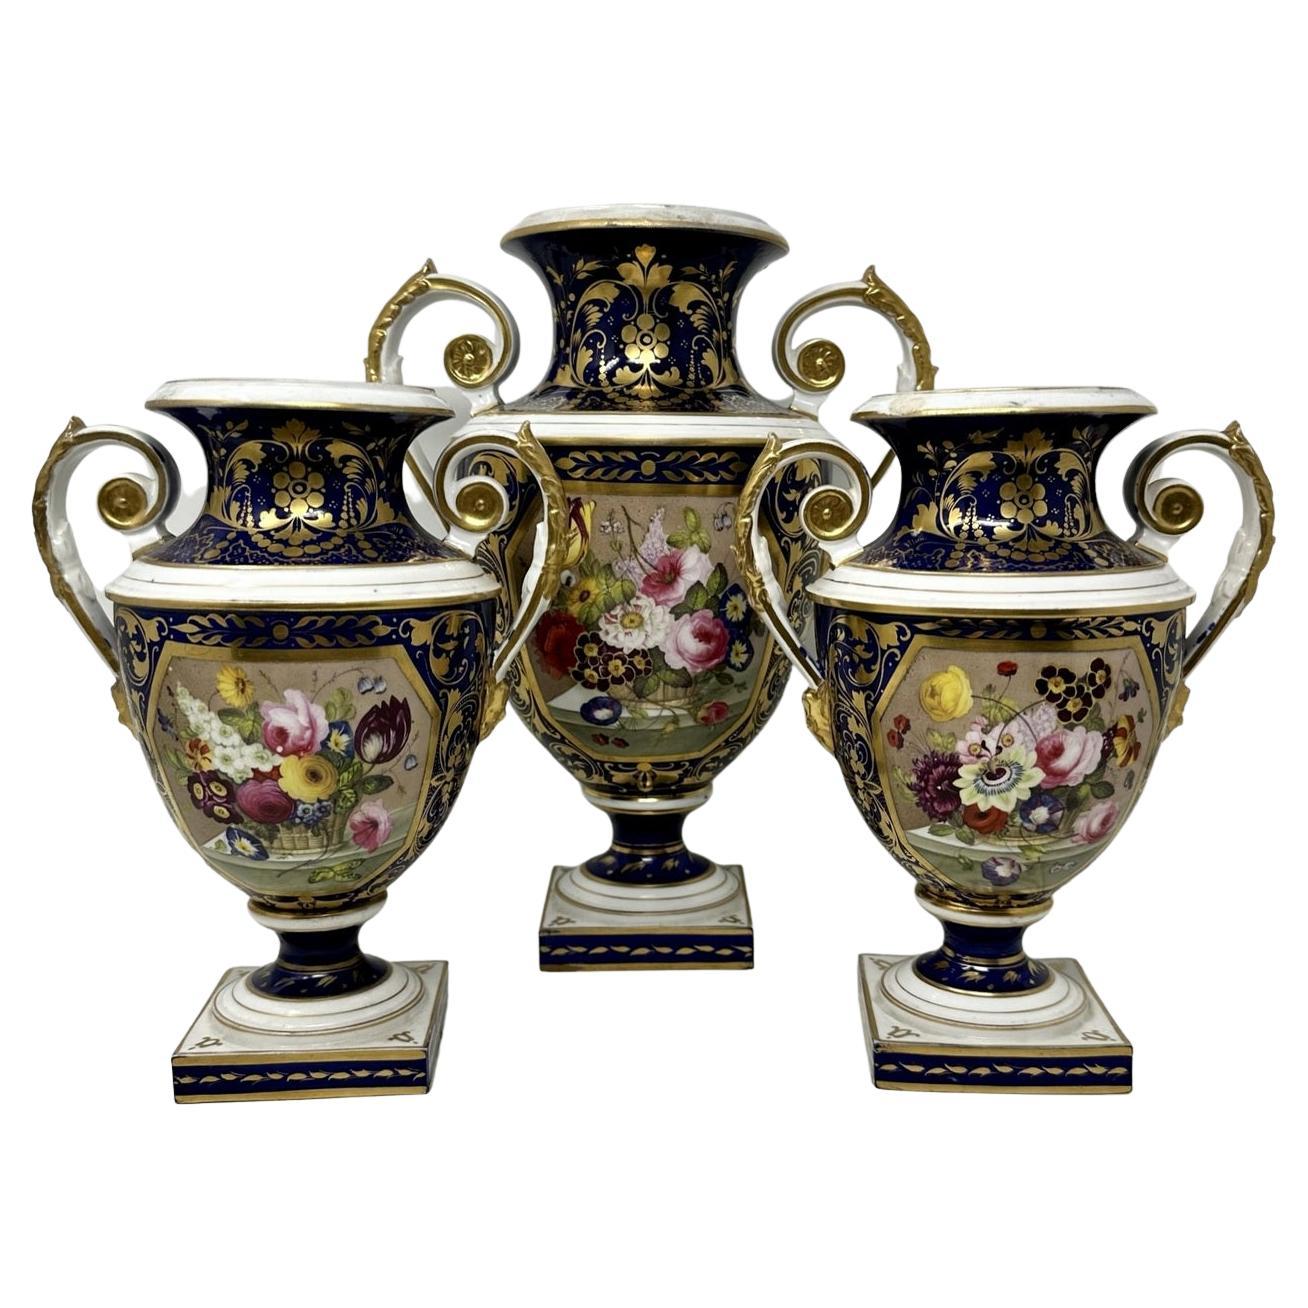 Antique Garniture English Royal Crown Derby Porcelain Vases by Thomas Steel 19C 